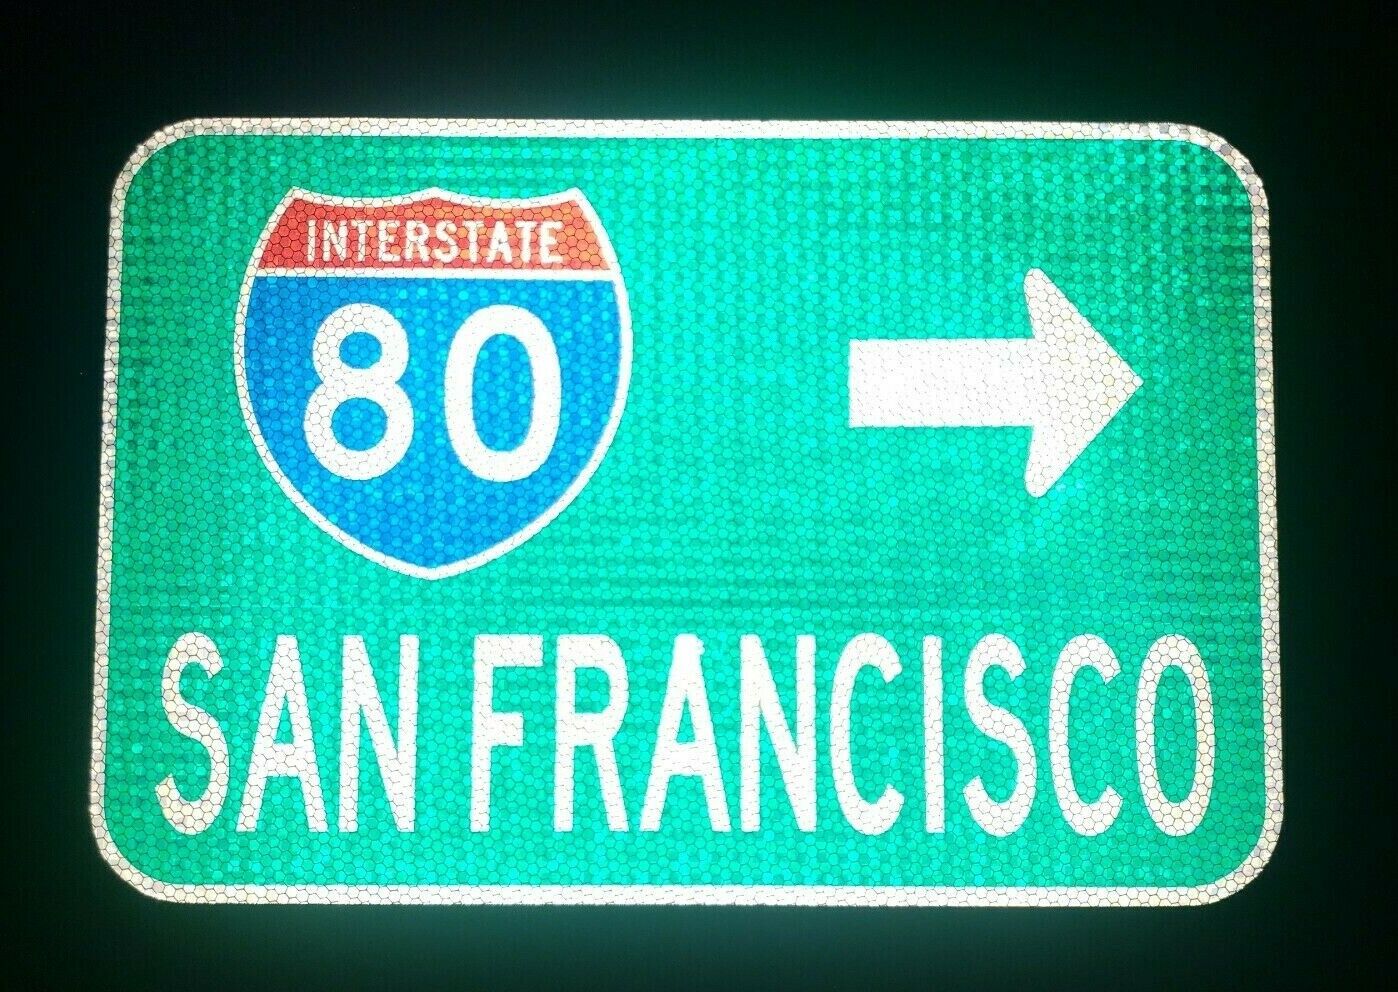 SAN FRANCISCO, California route road sign 18